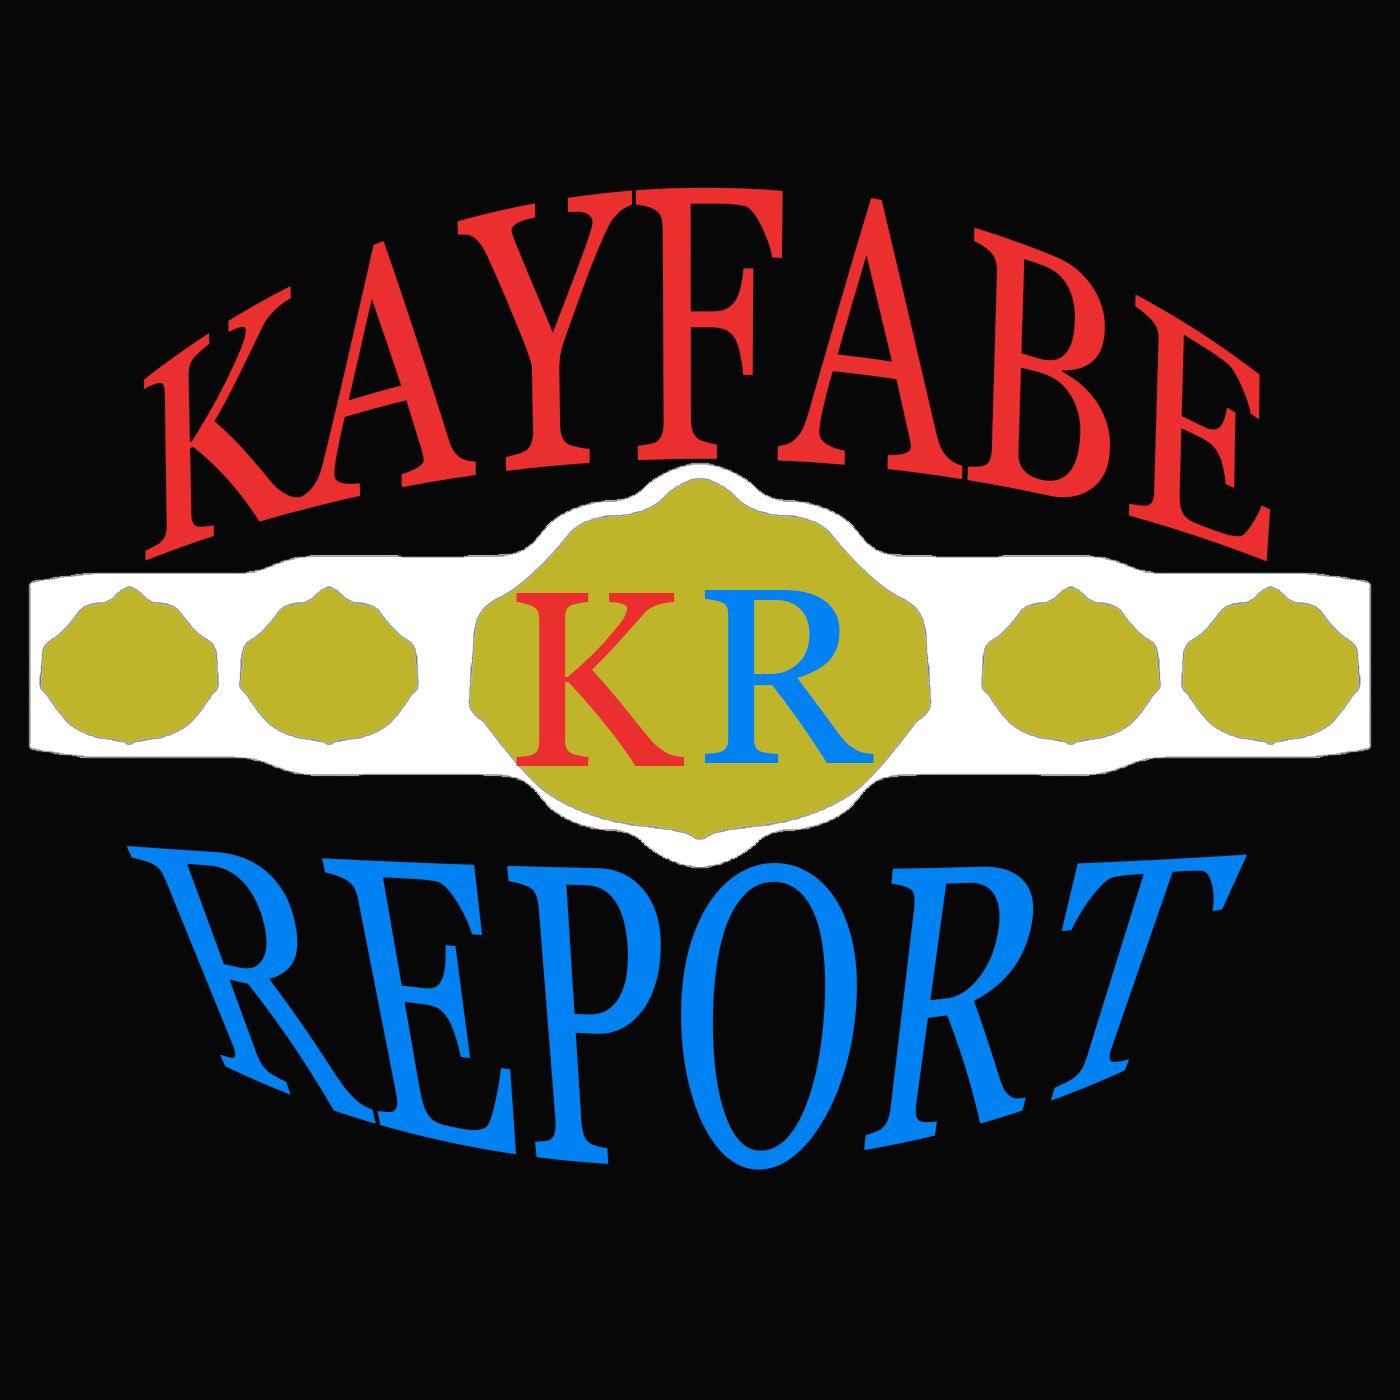 kayfabe report #36 wrestlemania 11 review / wrestling headlines